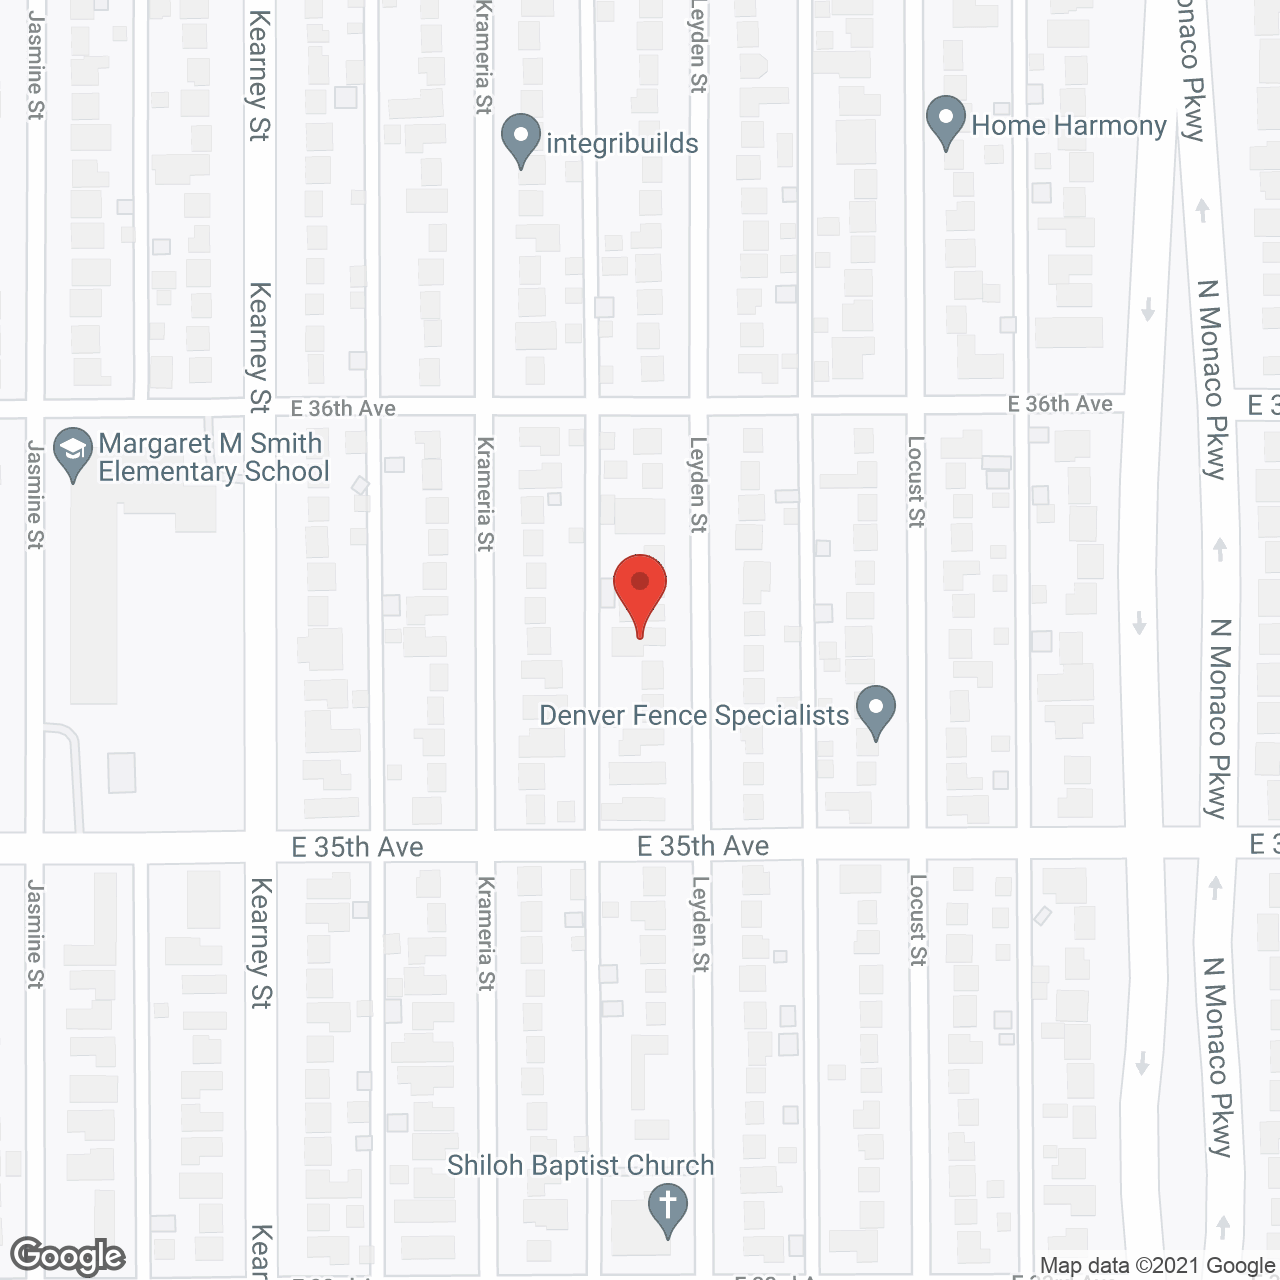 Assisted Living of Denver in google map